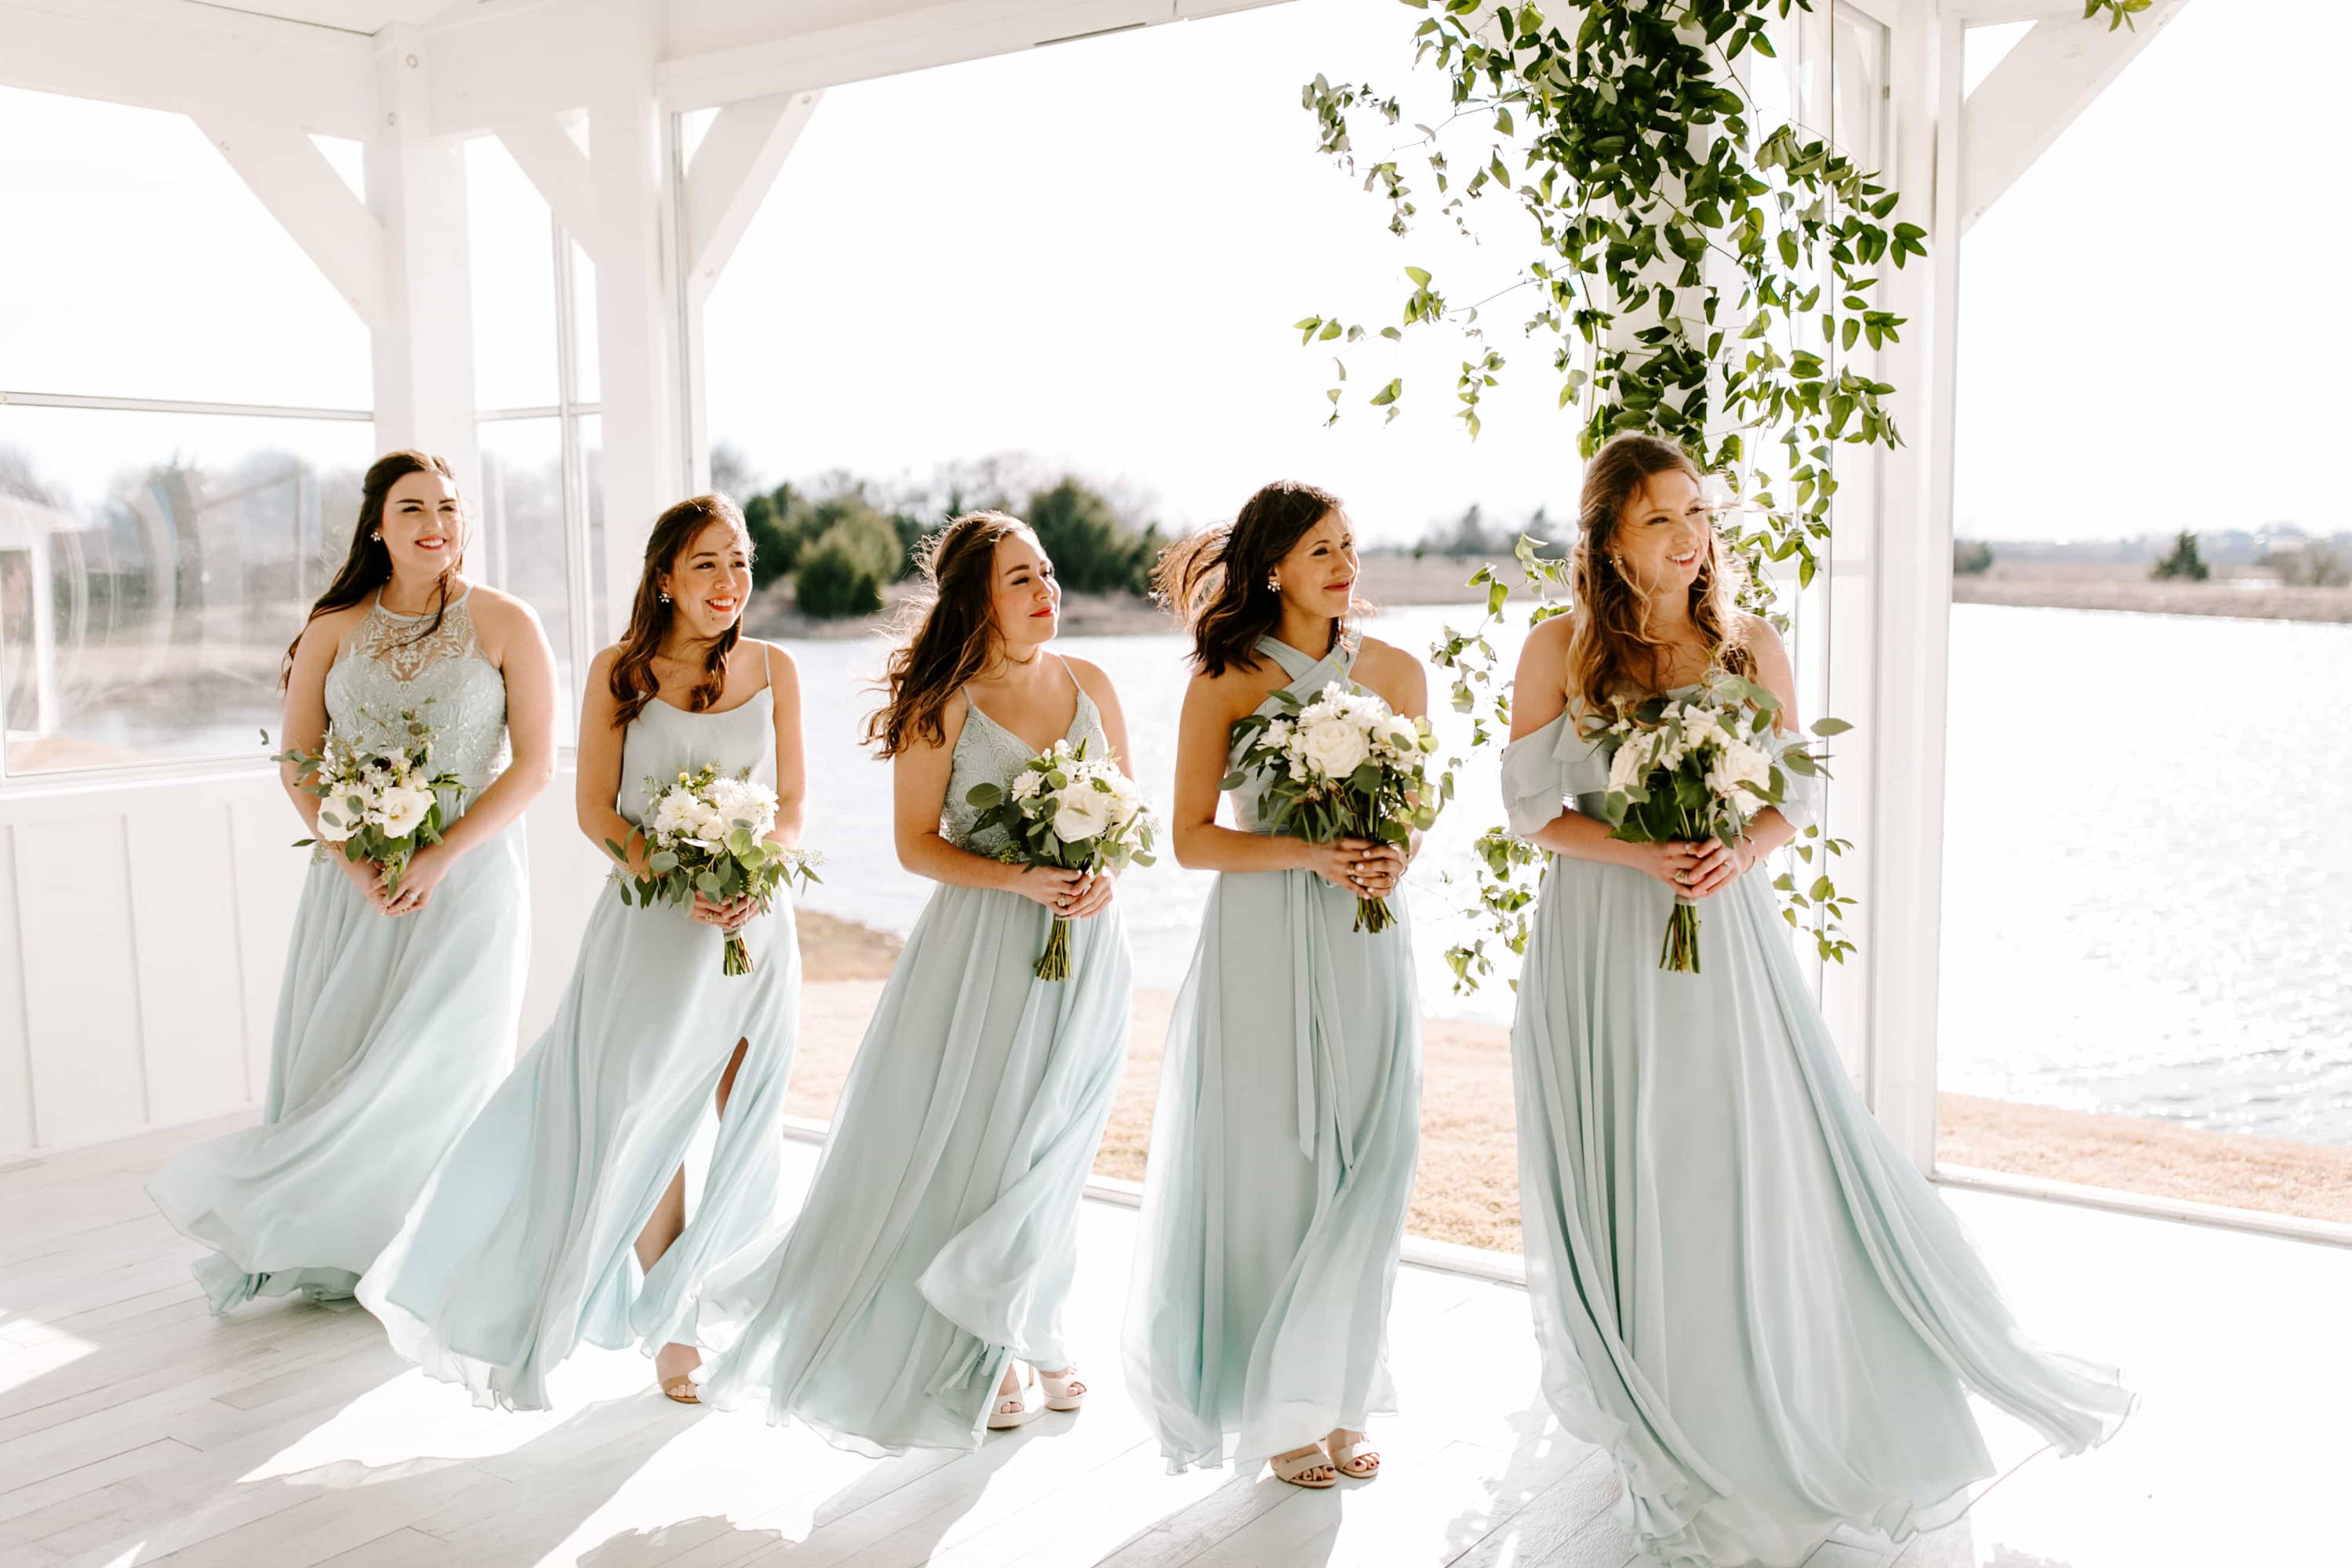 Stephanie ☀ Colter's Sea Glass Wedding ...